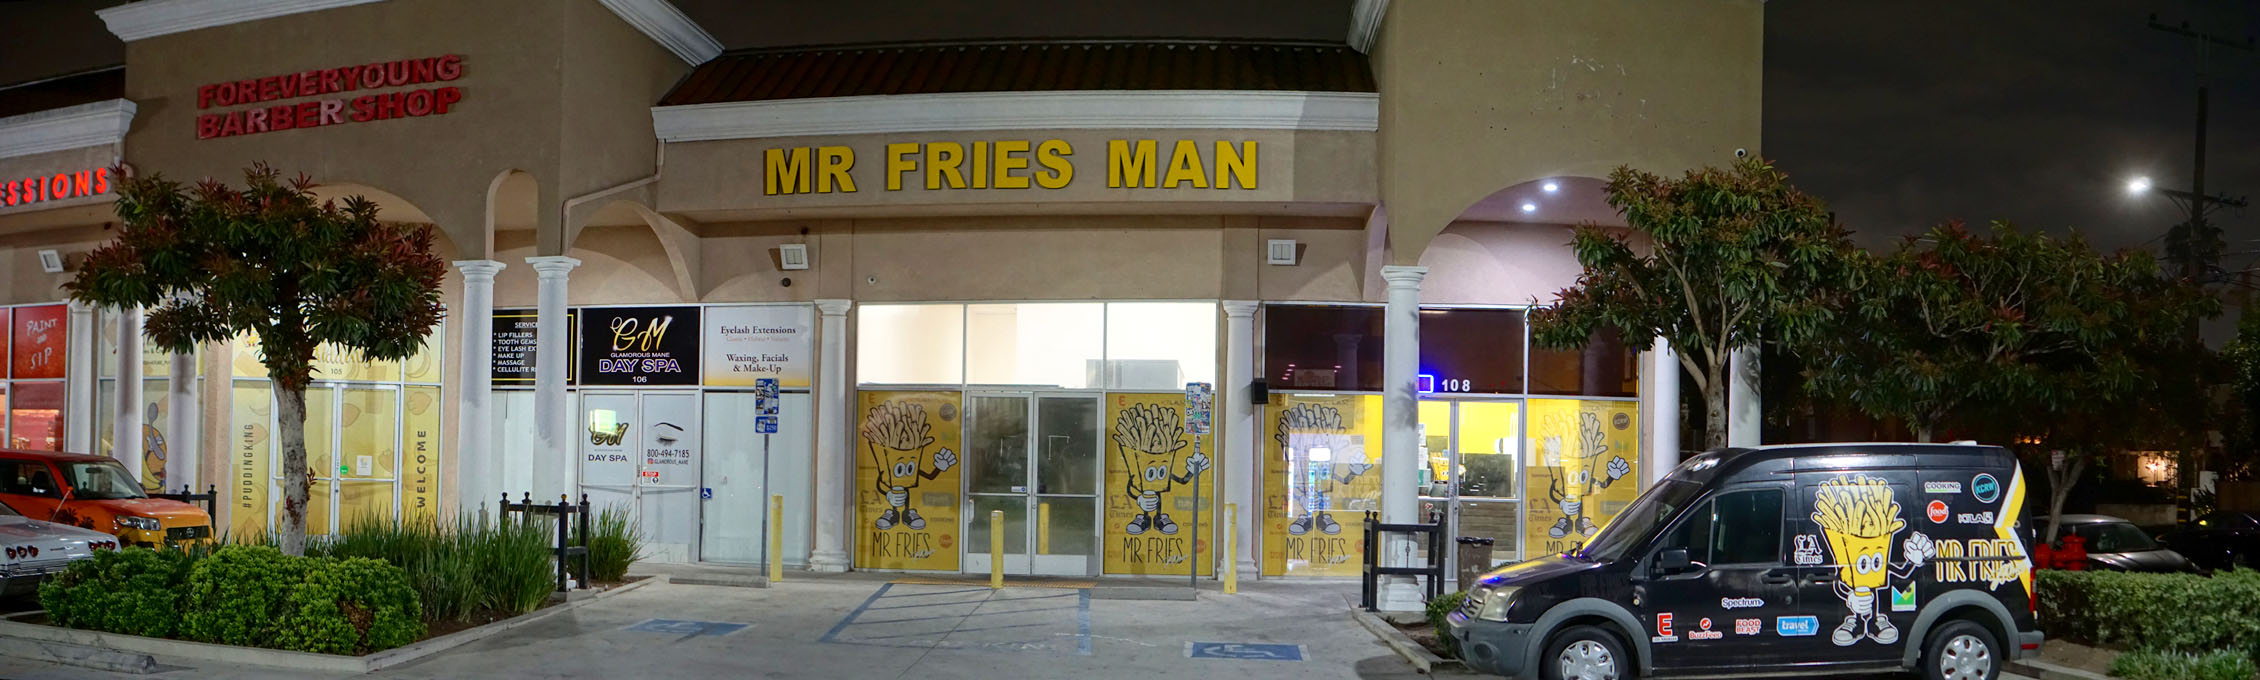 Mr Fries Man Exterior